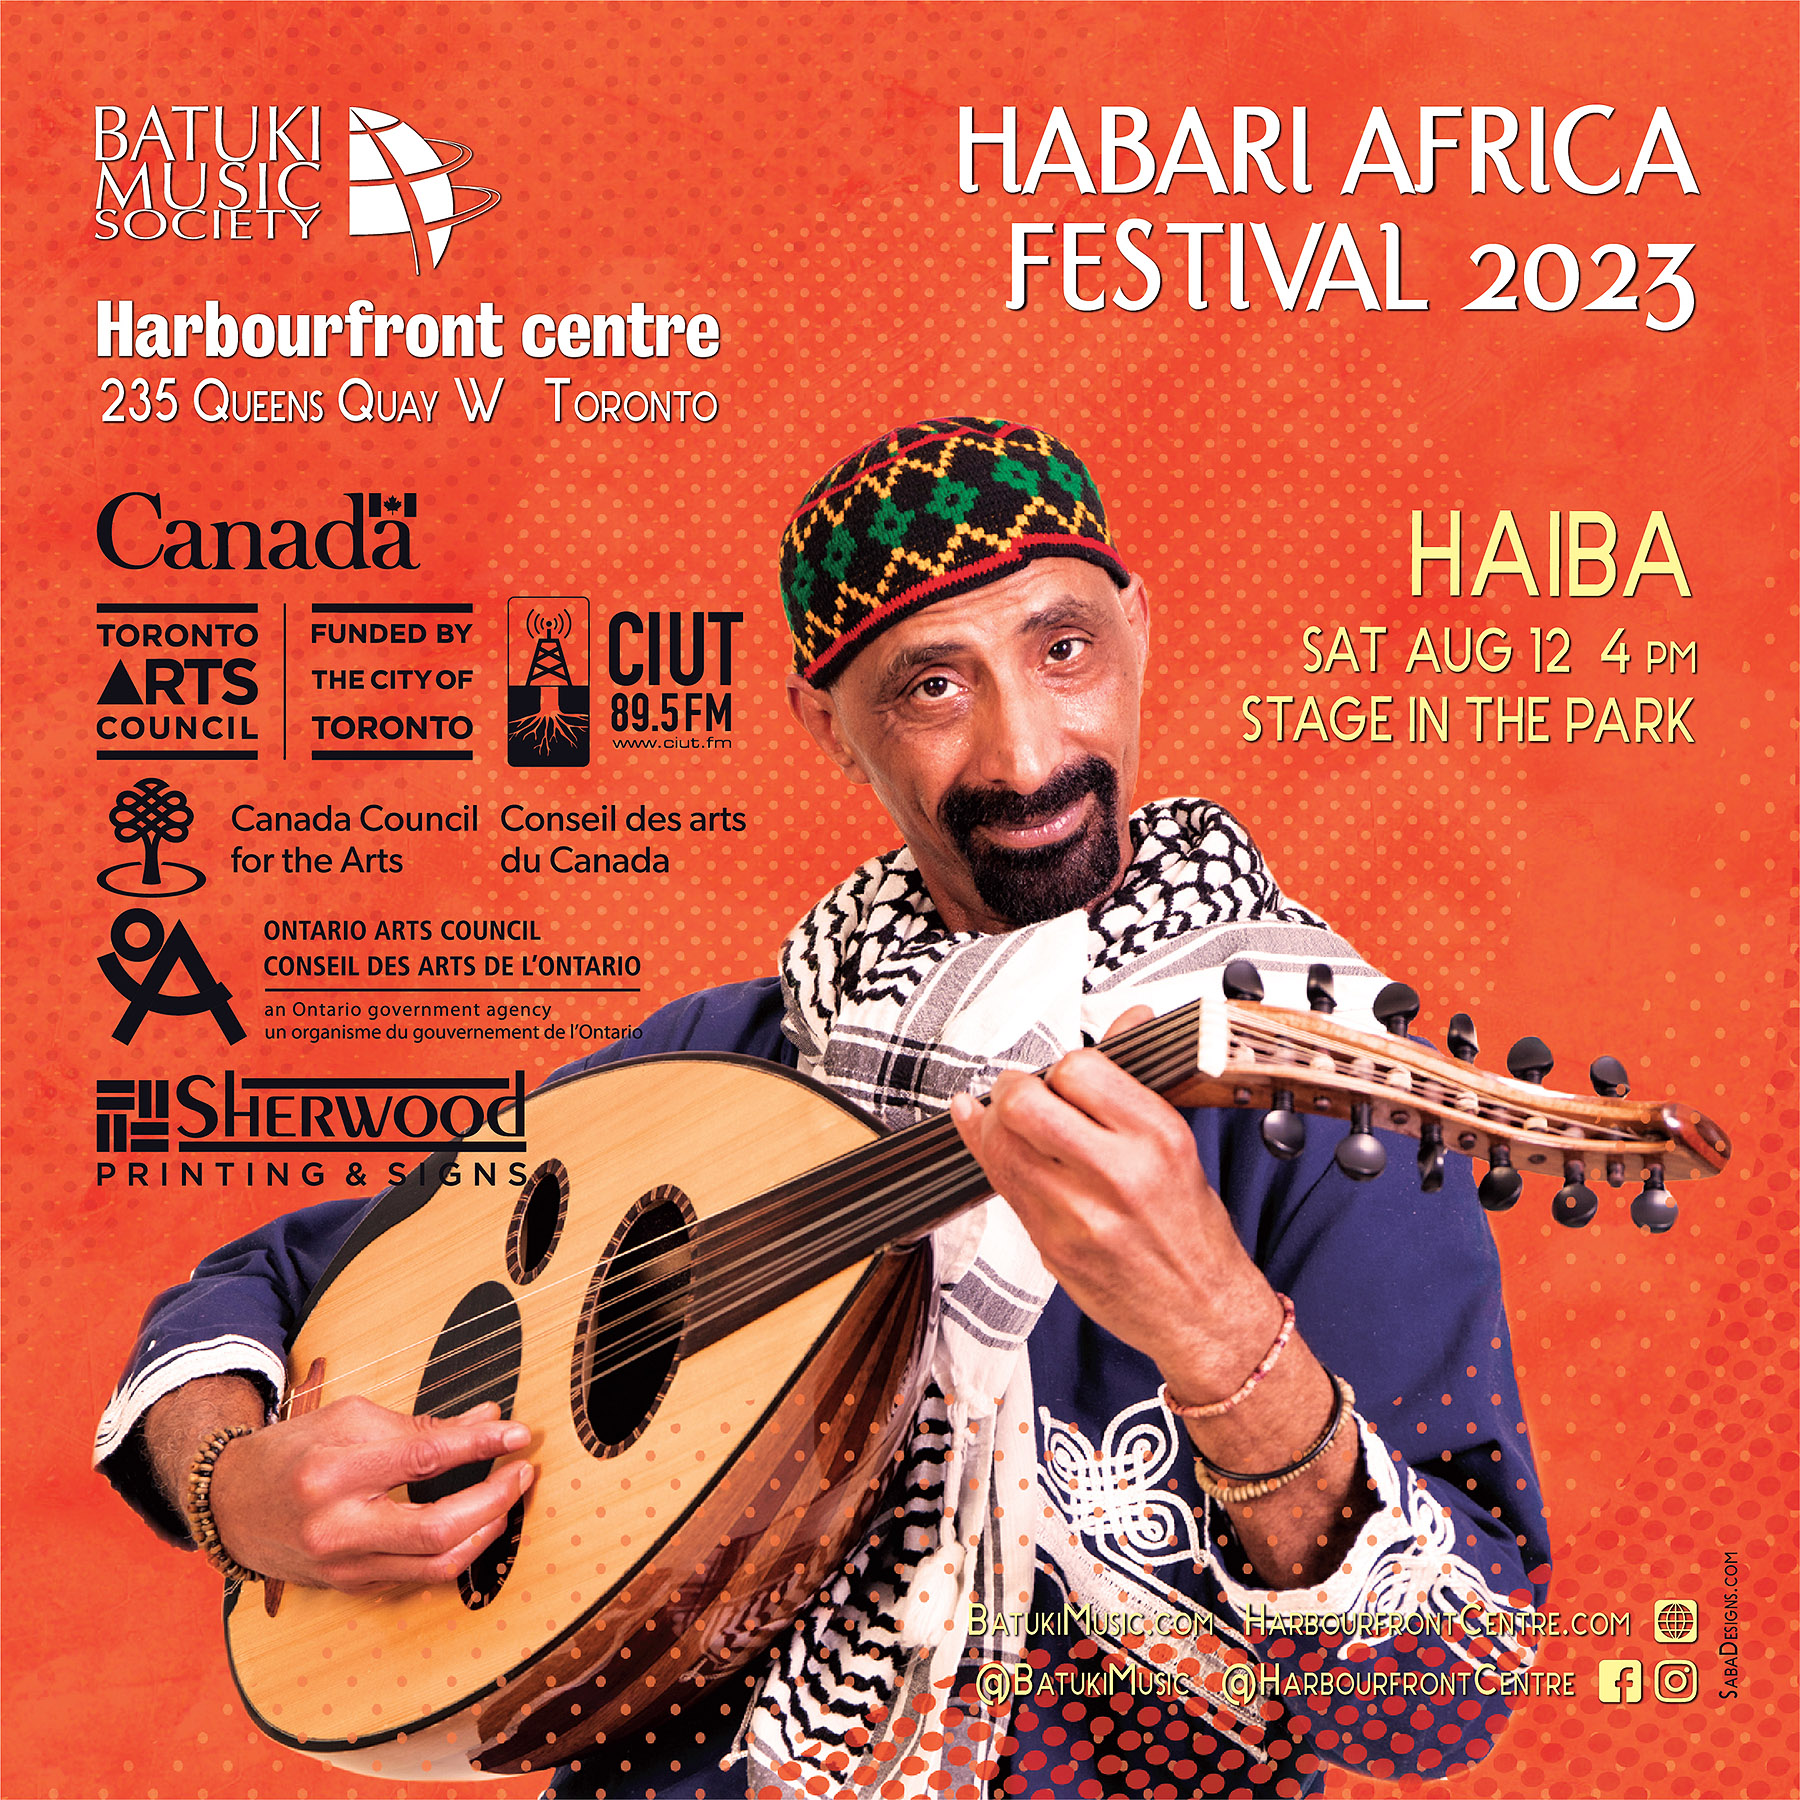 Habari Africa Live Festival 2023 by Batuki Music Society Haiba